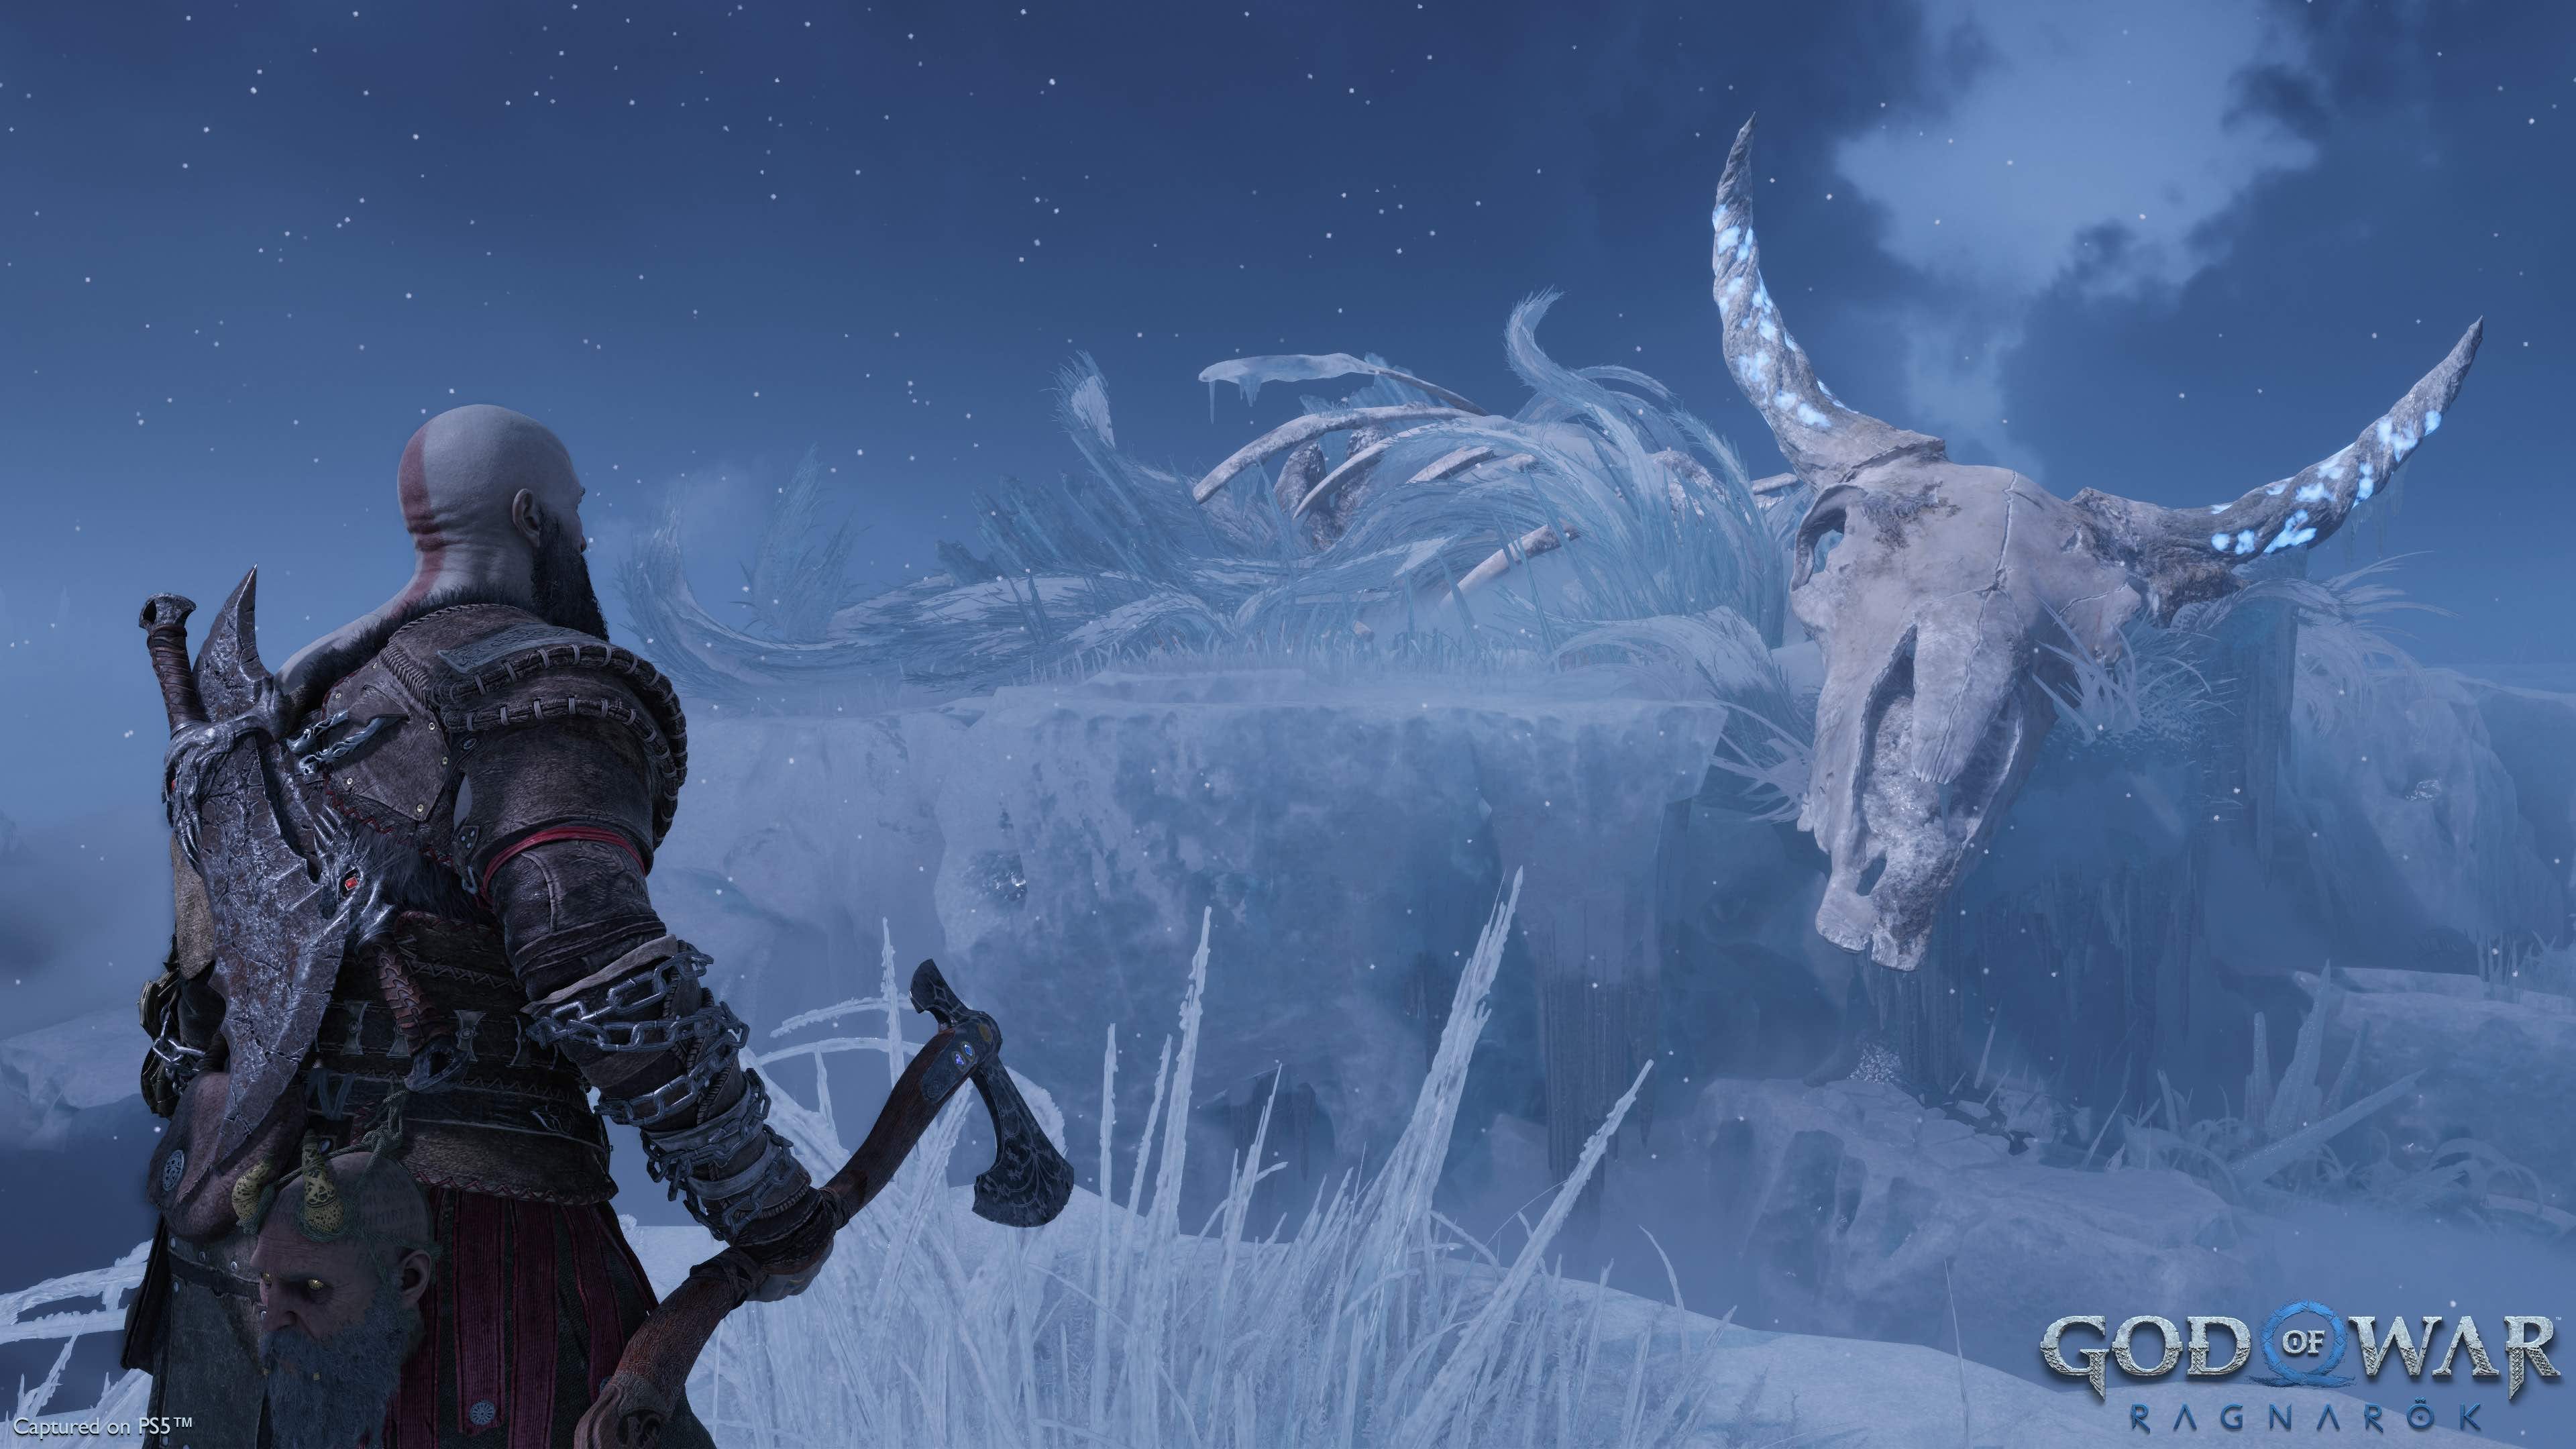 God of War Ragnarok' hits PS5, PS4 on November 9th